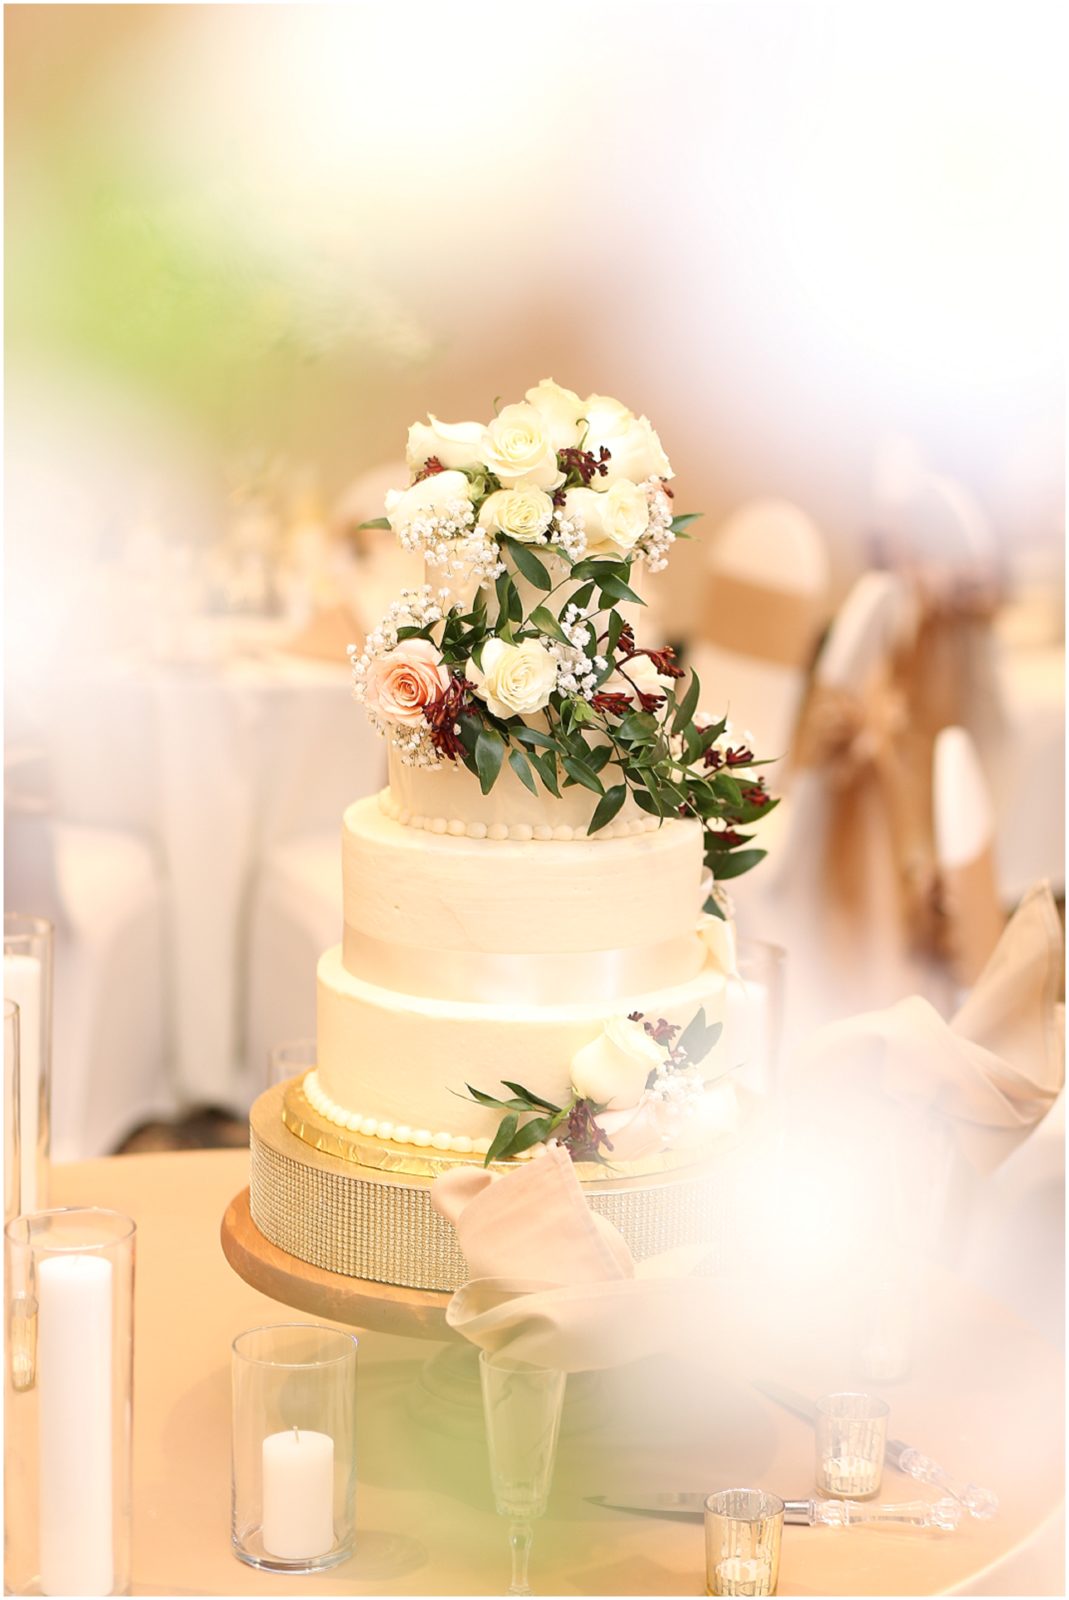 SOUTH ASIAN WEDDING PHOTOGRAPHER IN KANSAS CITY - WHITE WEDDING CAKE